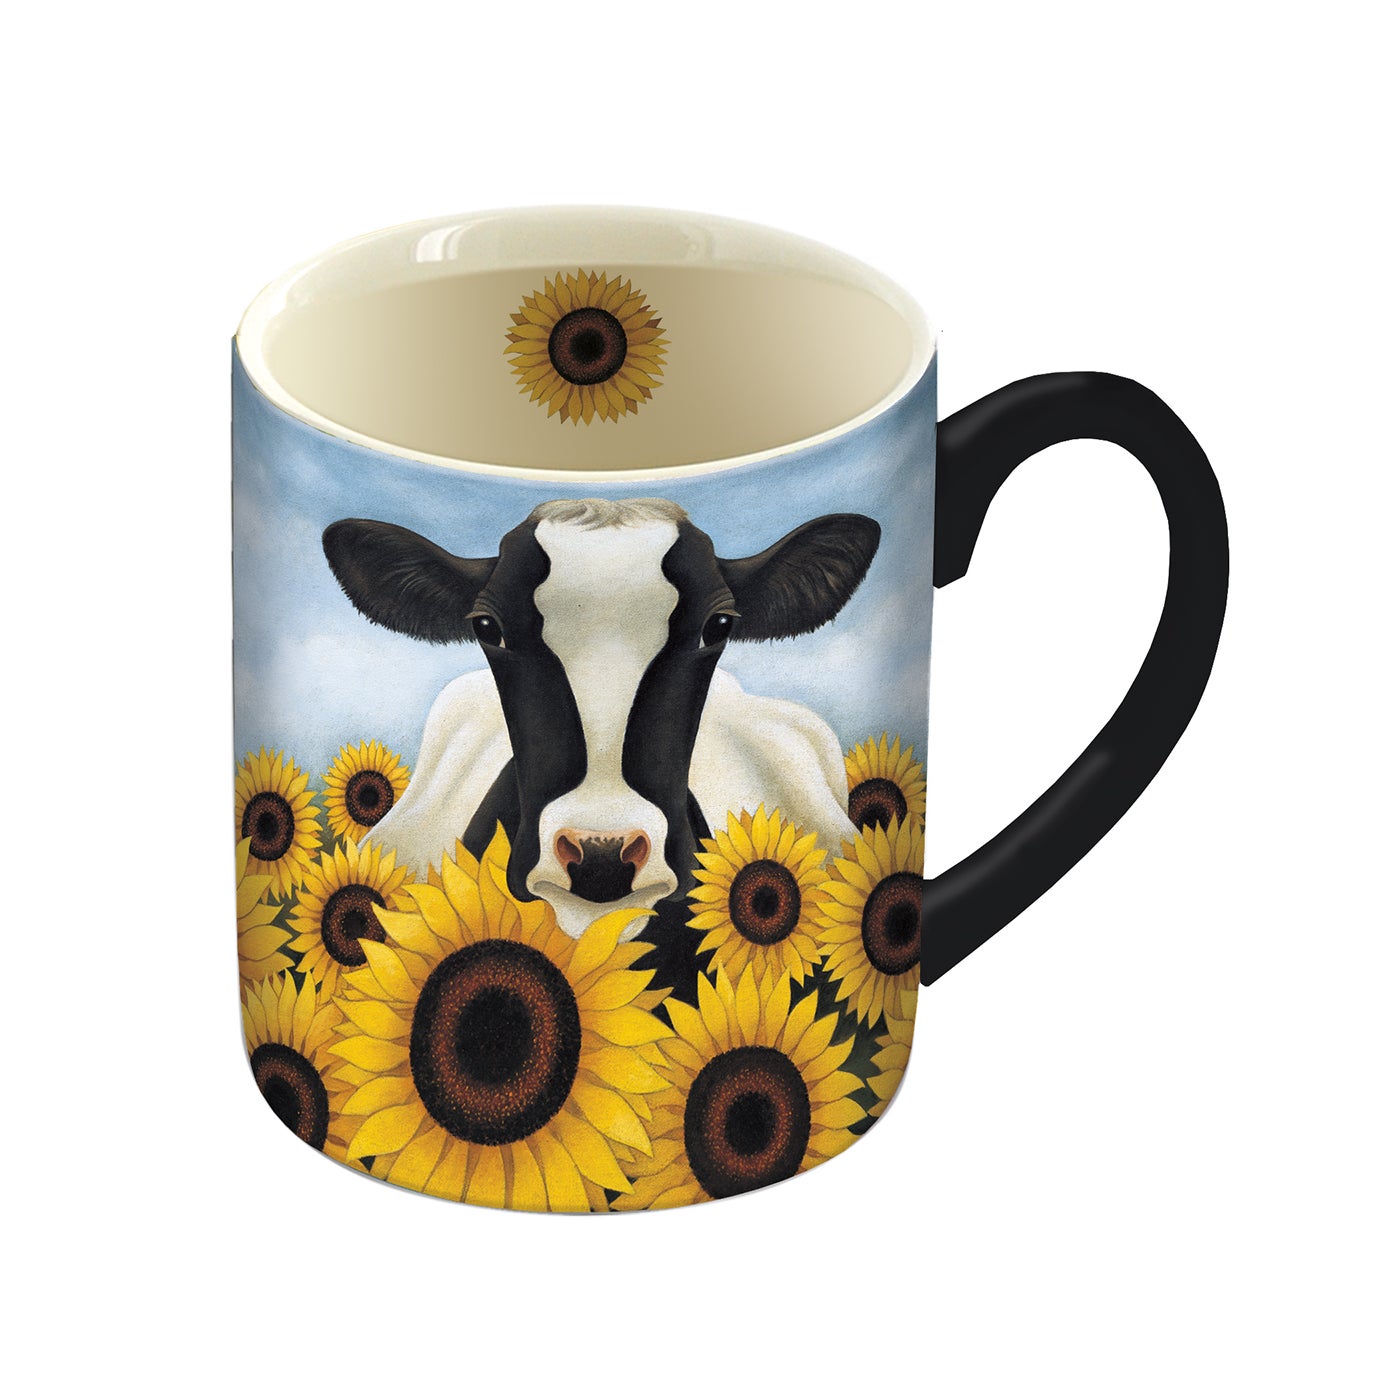 Glass Logo Mug — Big Shoulders Coffee